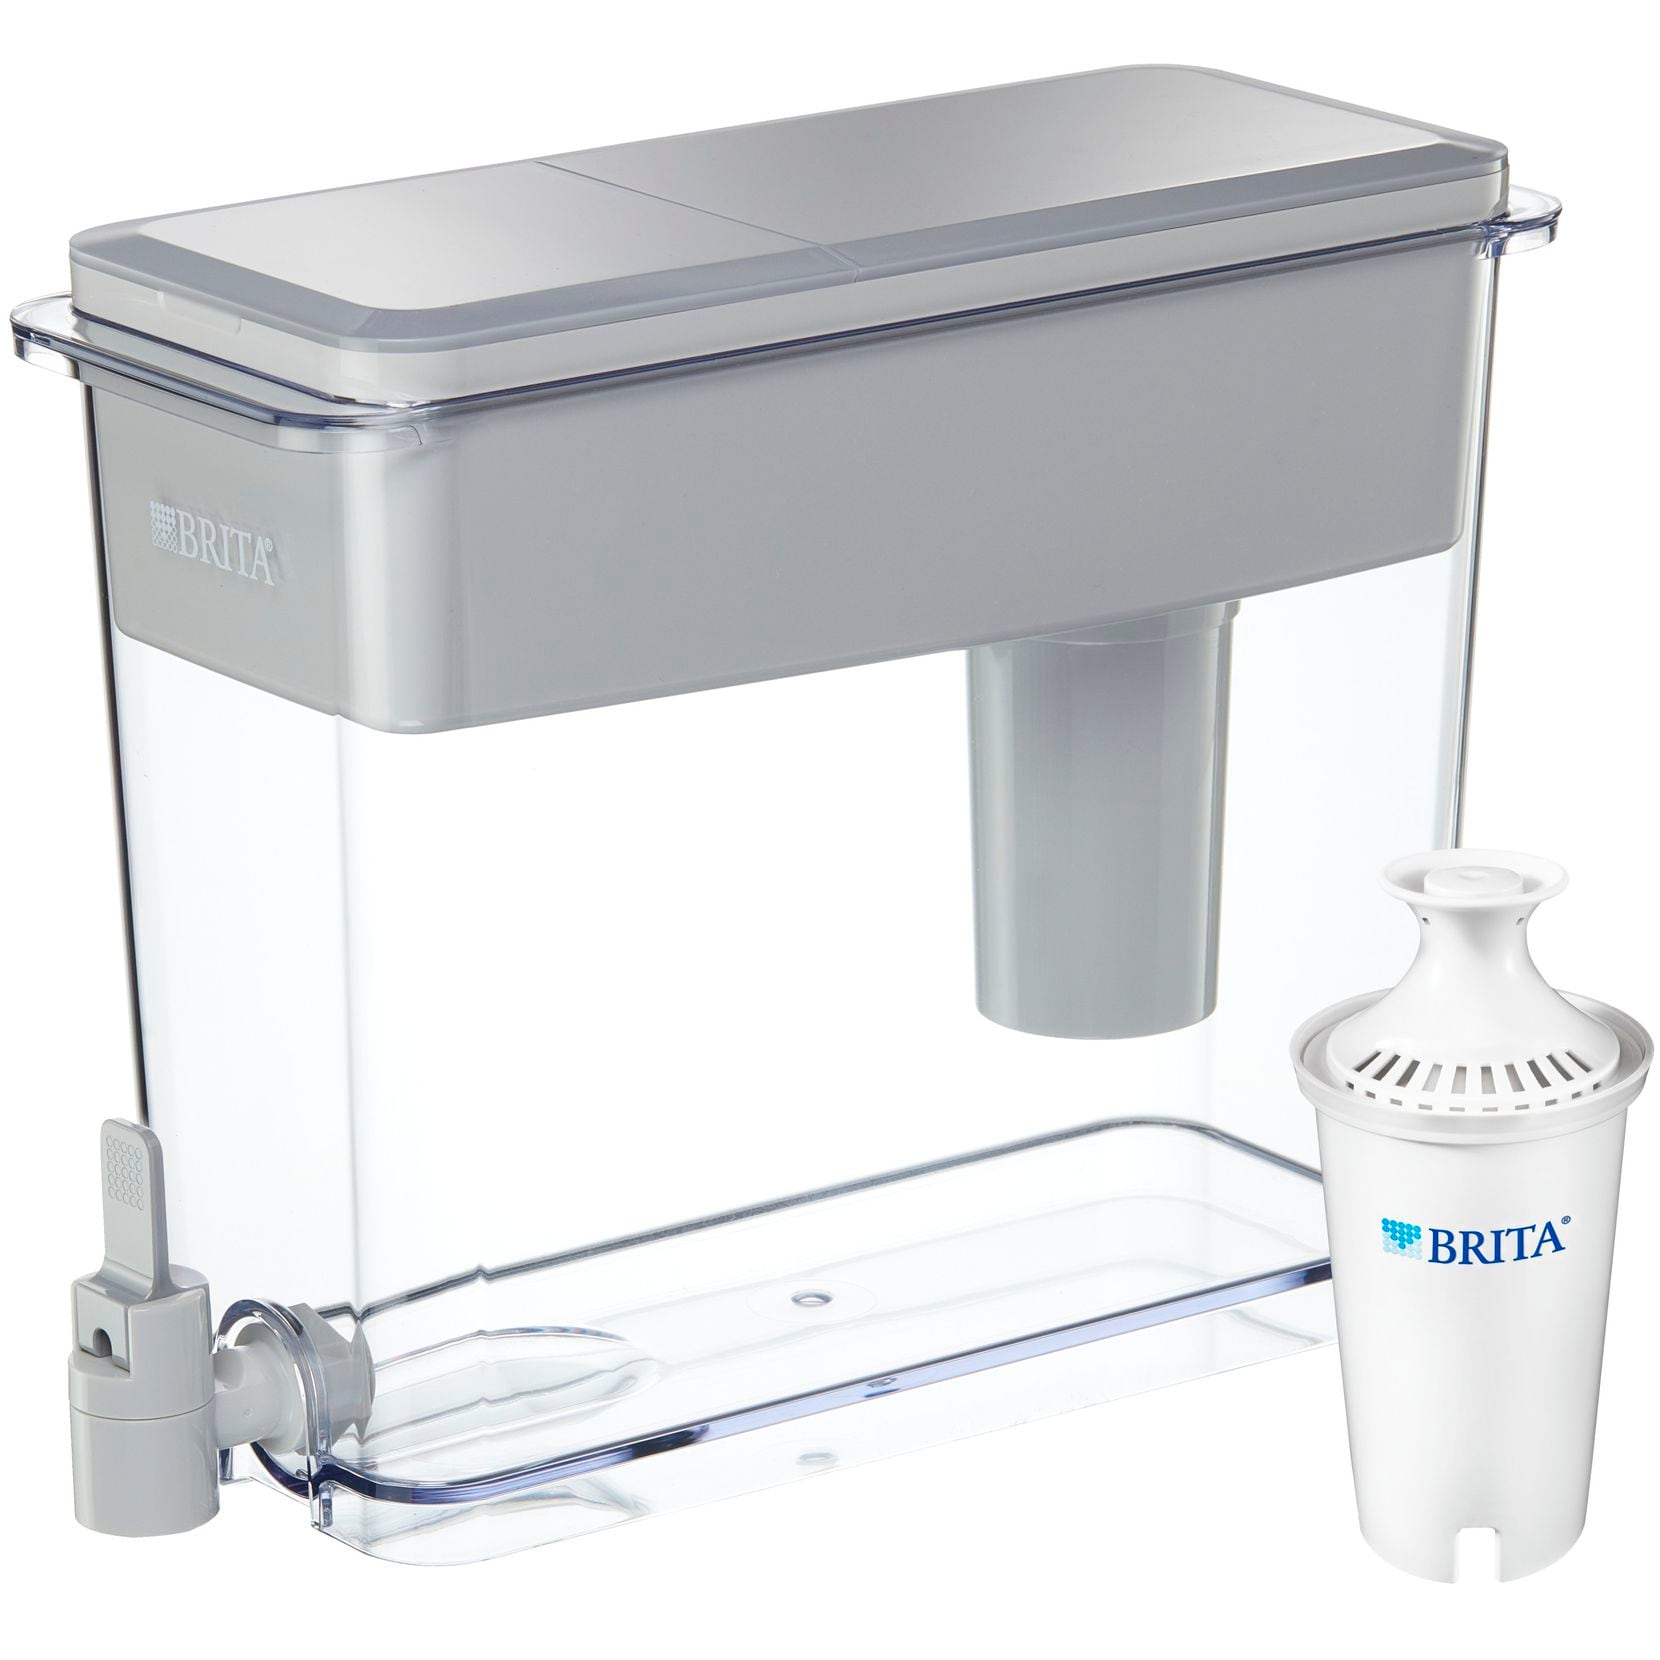 Brita Stream UltraMax Water Filter Dispenser 18 cup